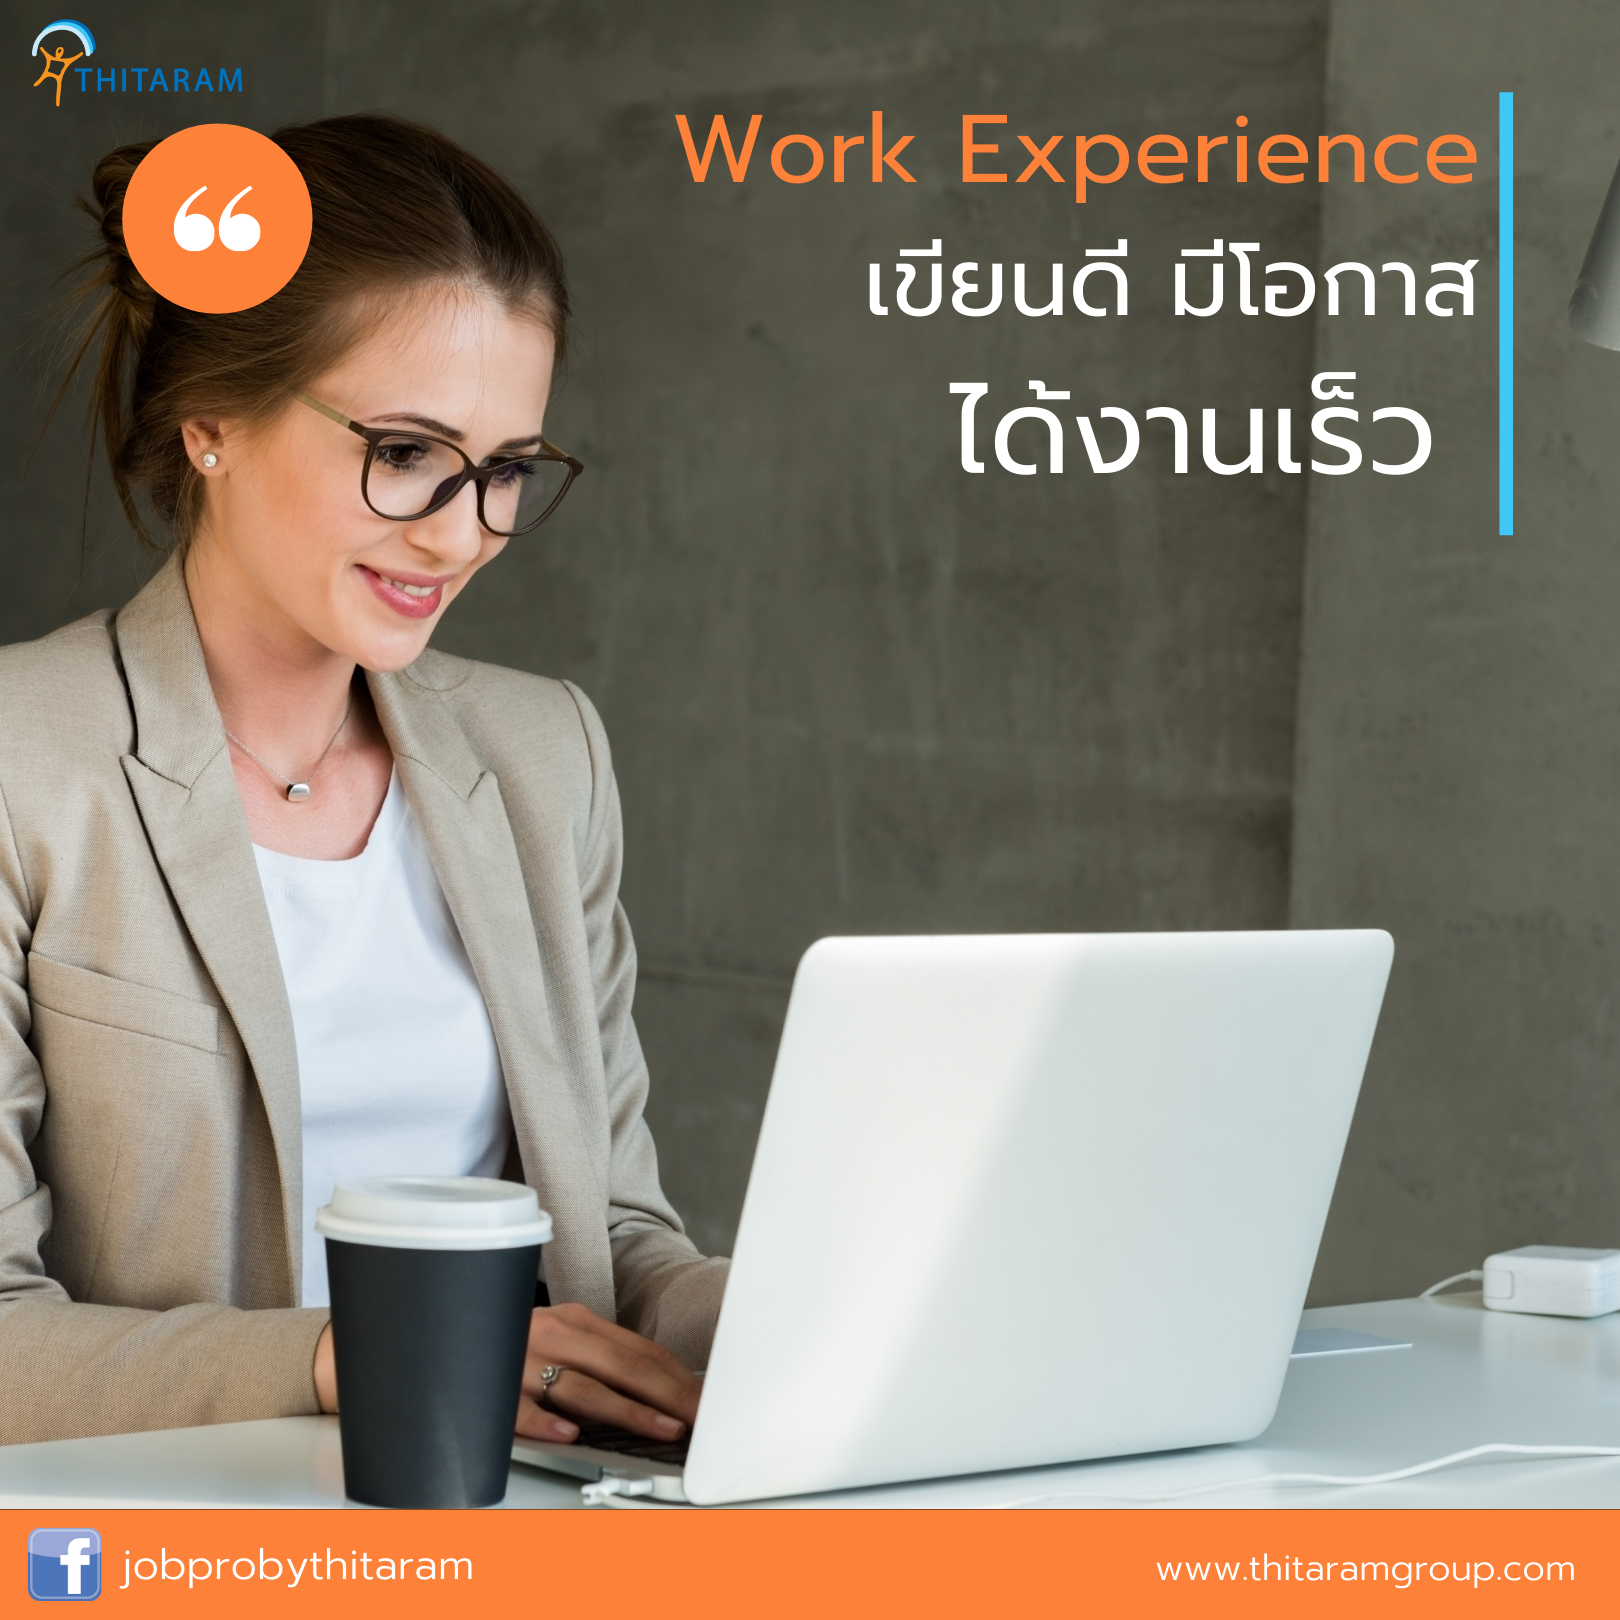 Work Experience ข้อมูลสำคัญ ใน Resume ที่จะช่วยให้คุณได้งาน